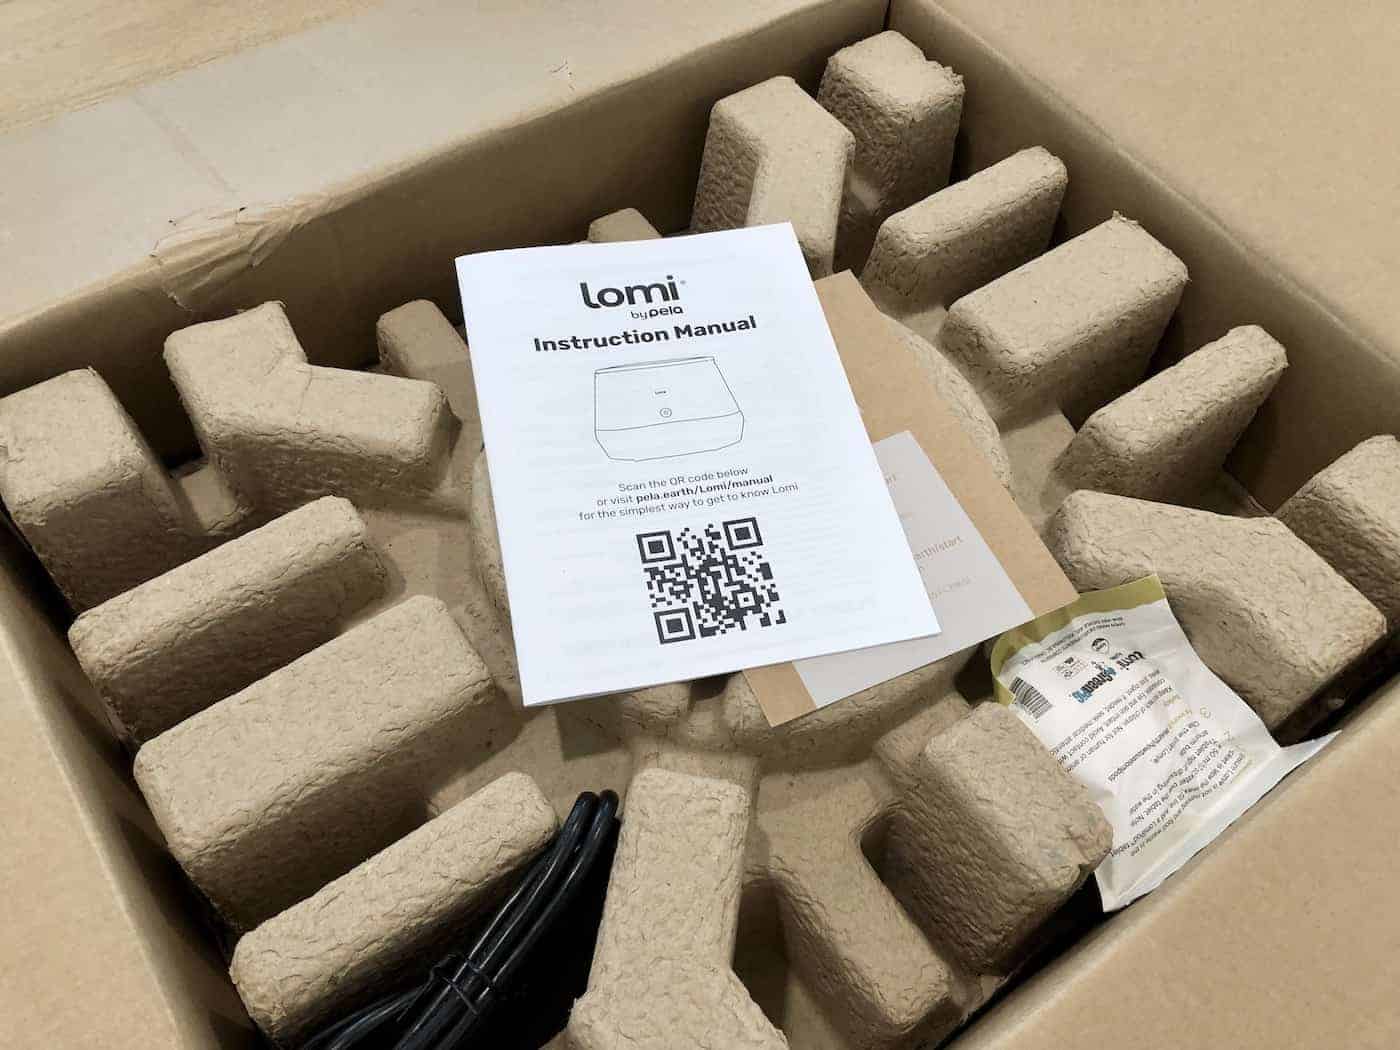 Lomi box - unboxing a lomi compost machine